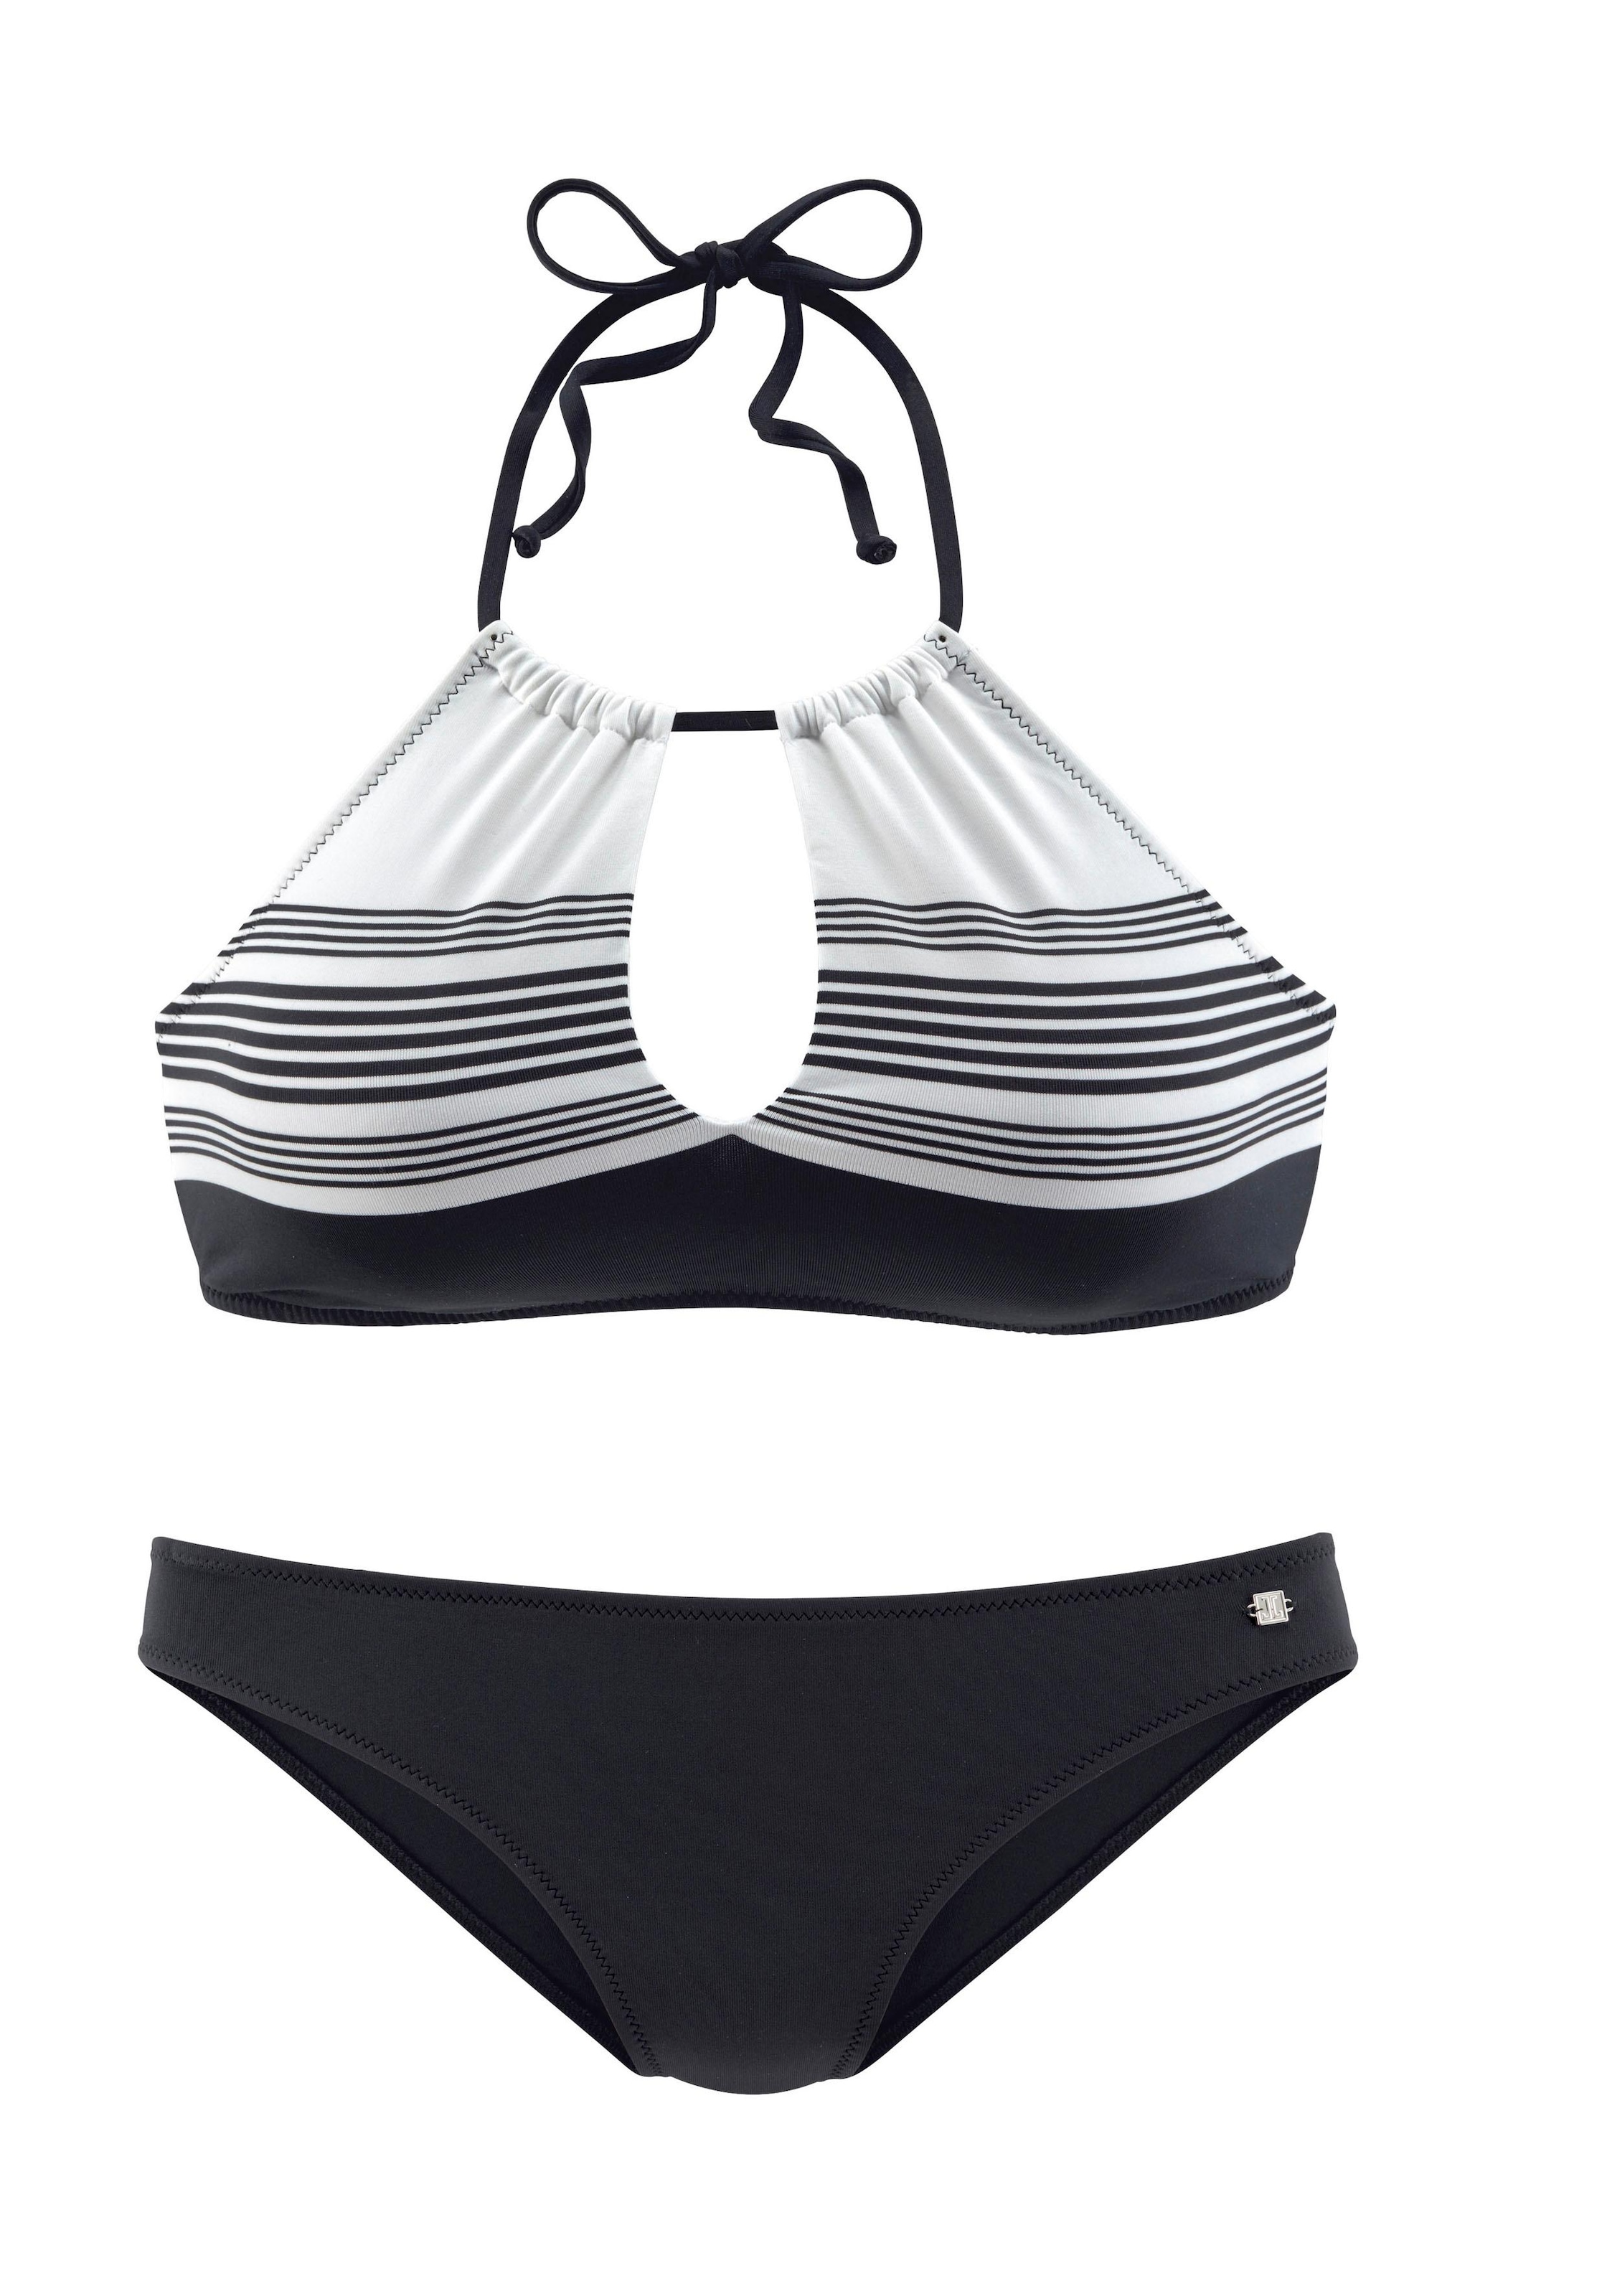 Bustier-Bikini online kaufen | Bustier-Bikinis jetzt bei LASCANA